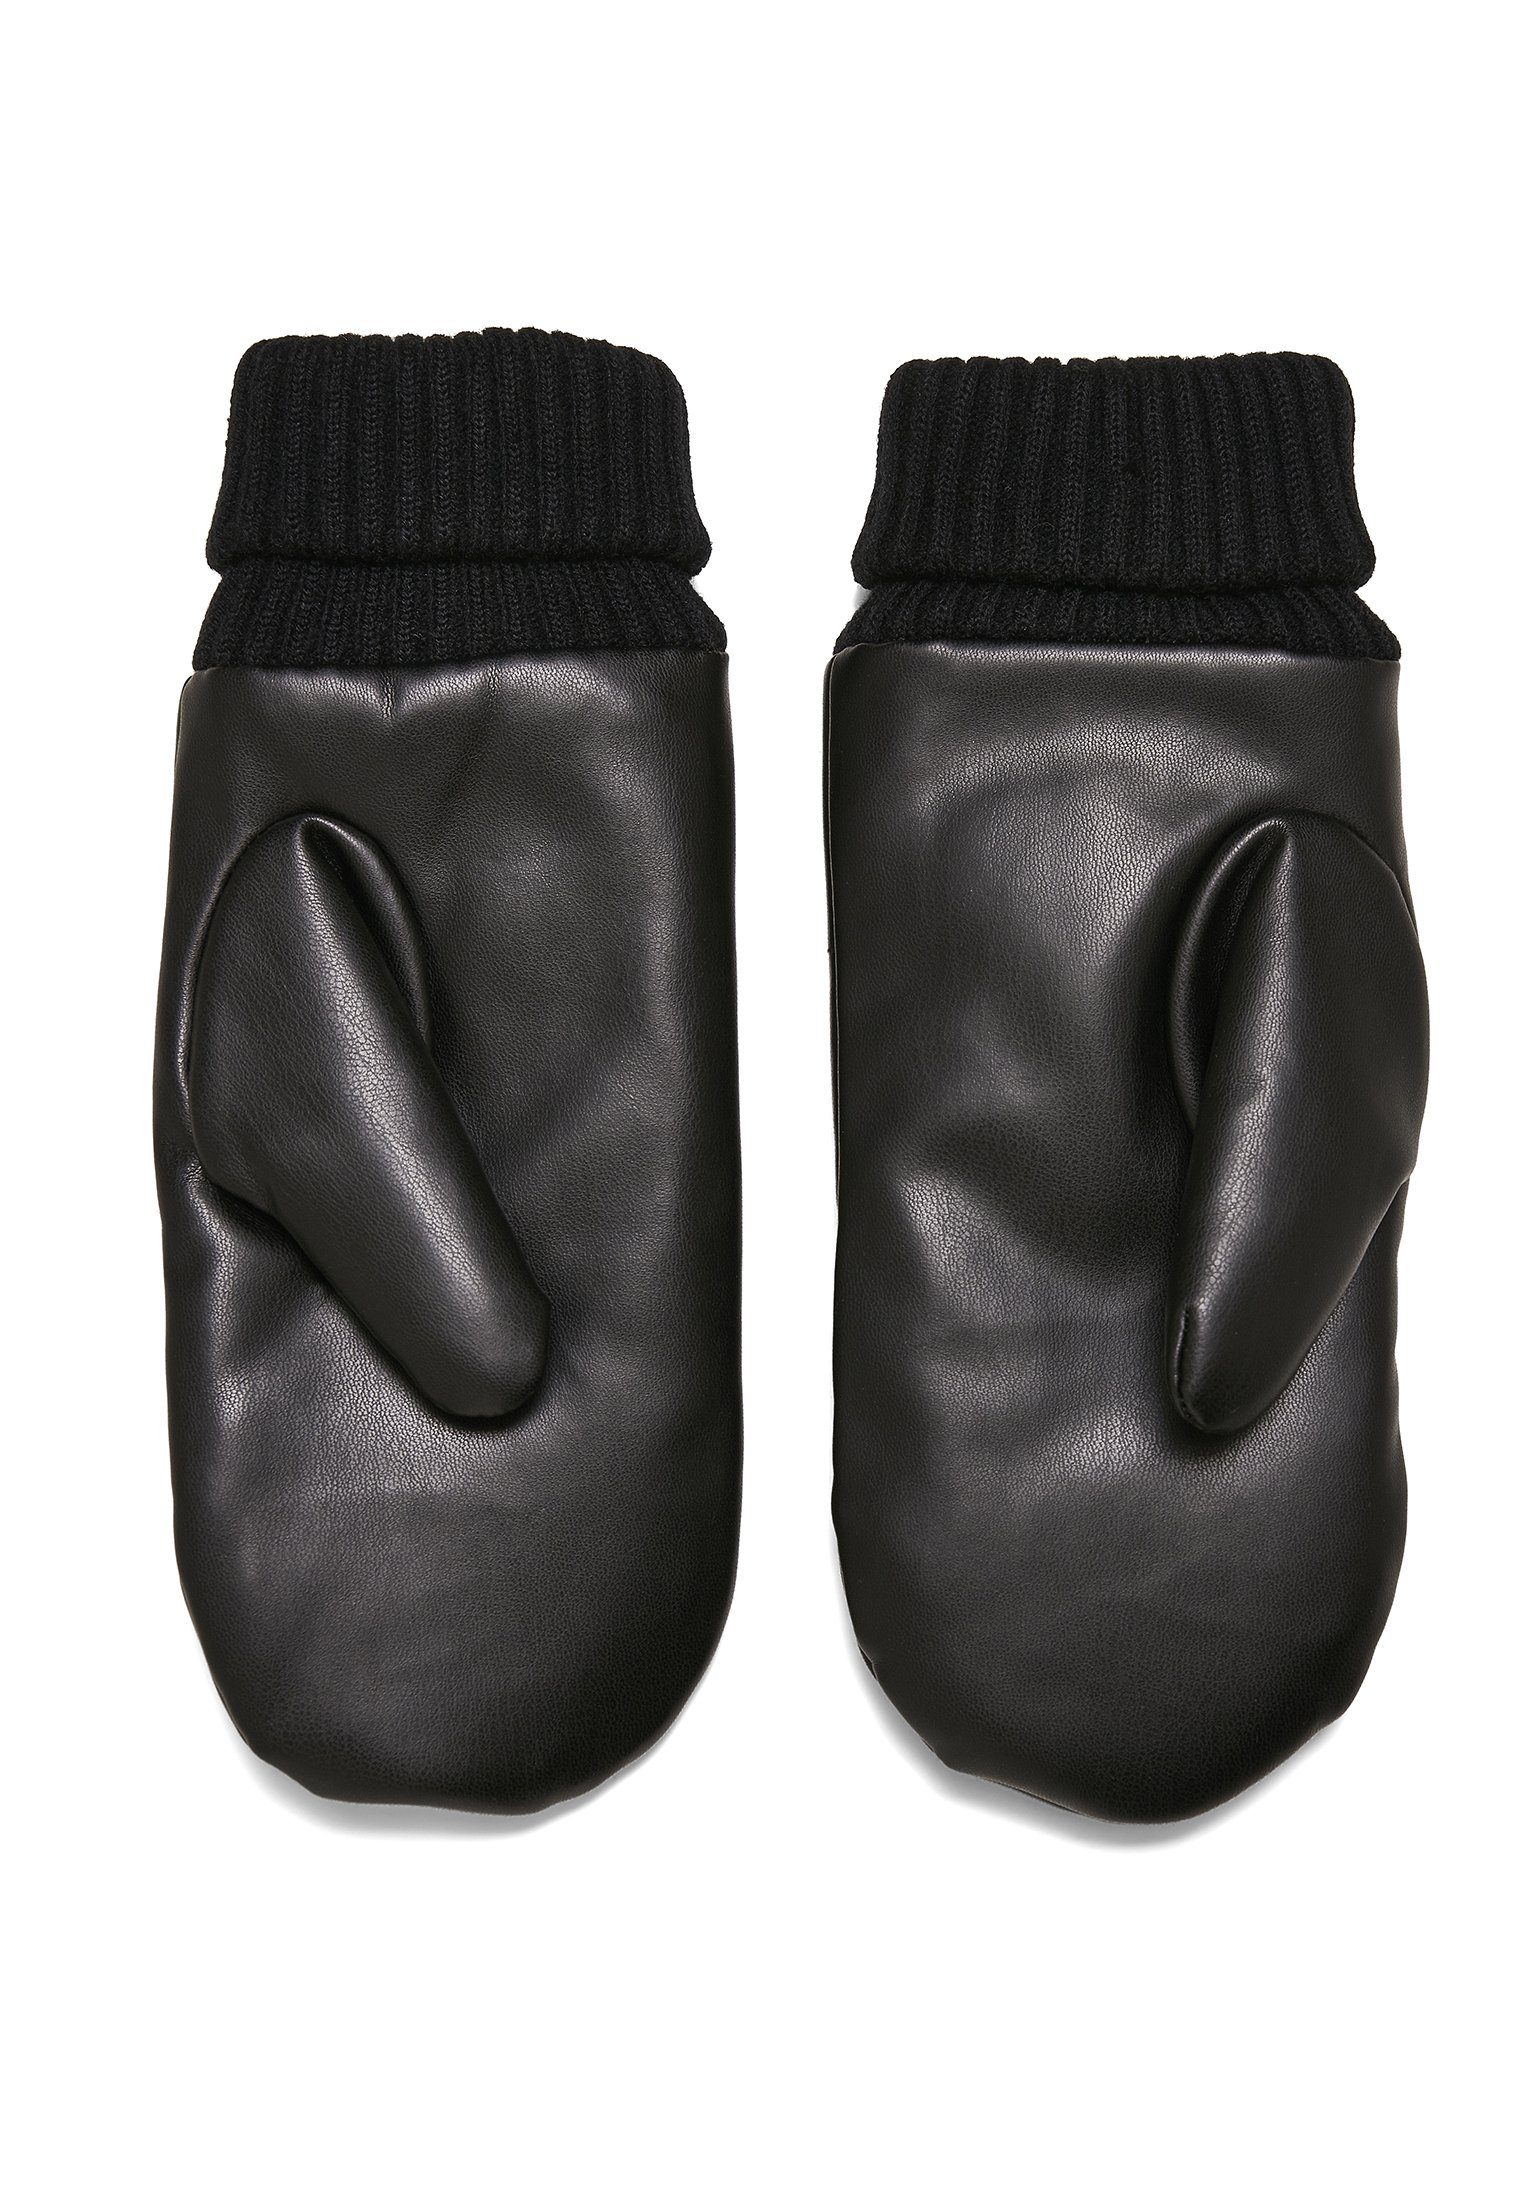 Leather Puffer CLASSICS Unisex URBAN Baumwollhandschuhe Imitation Gloves